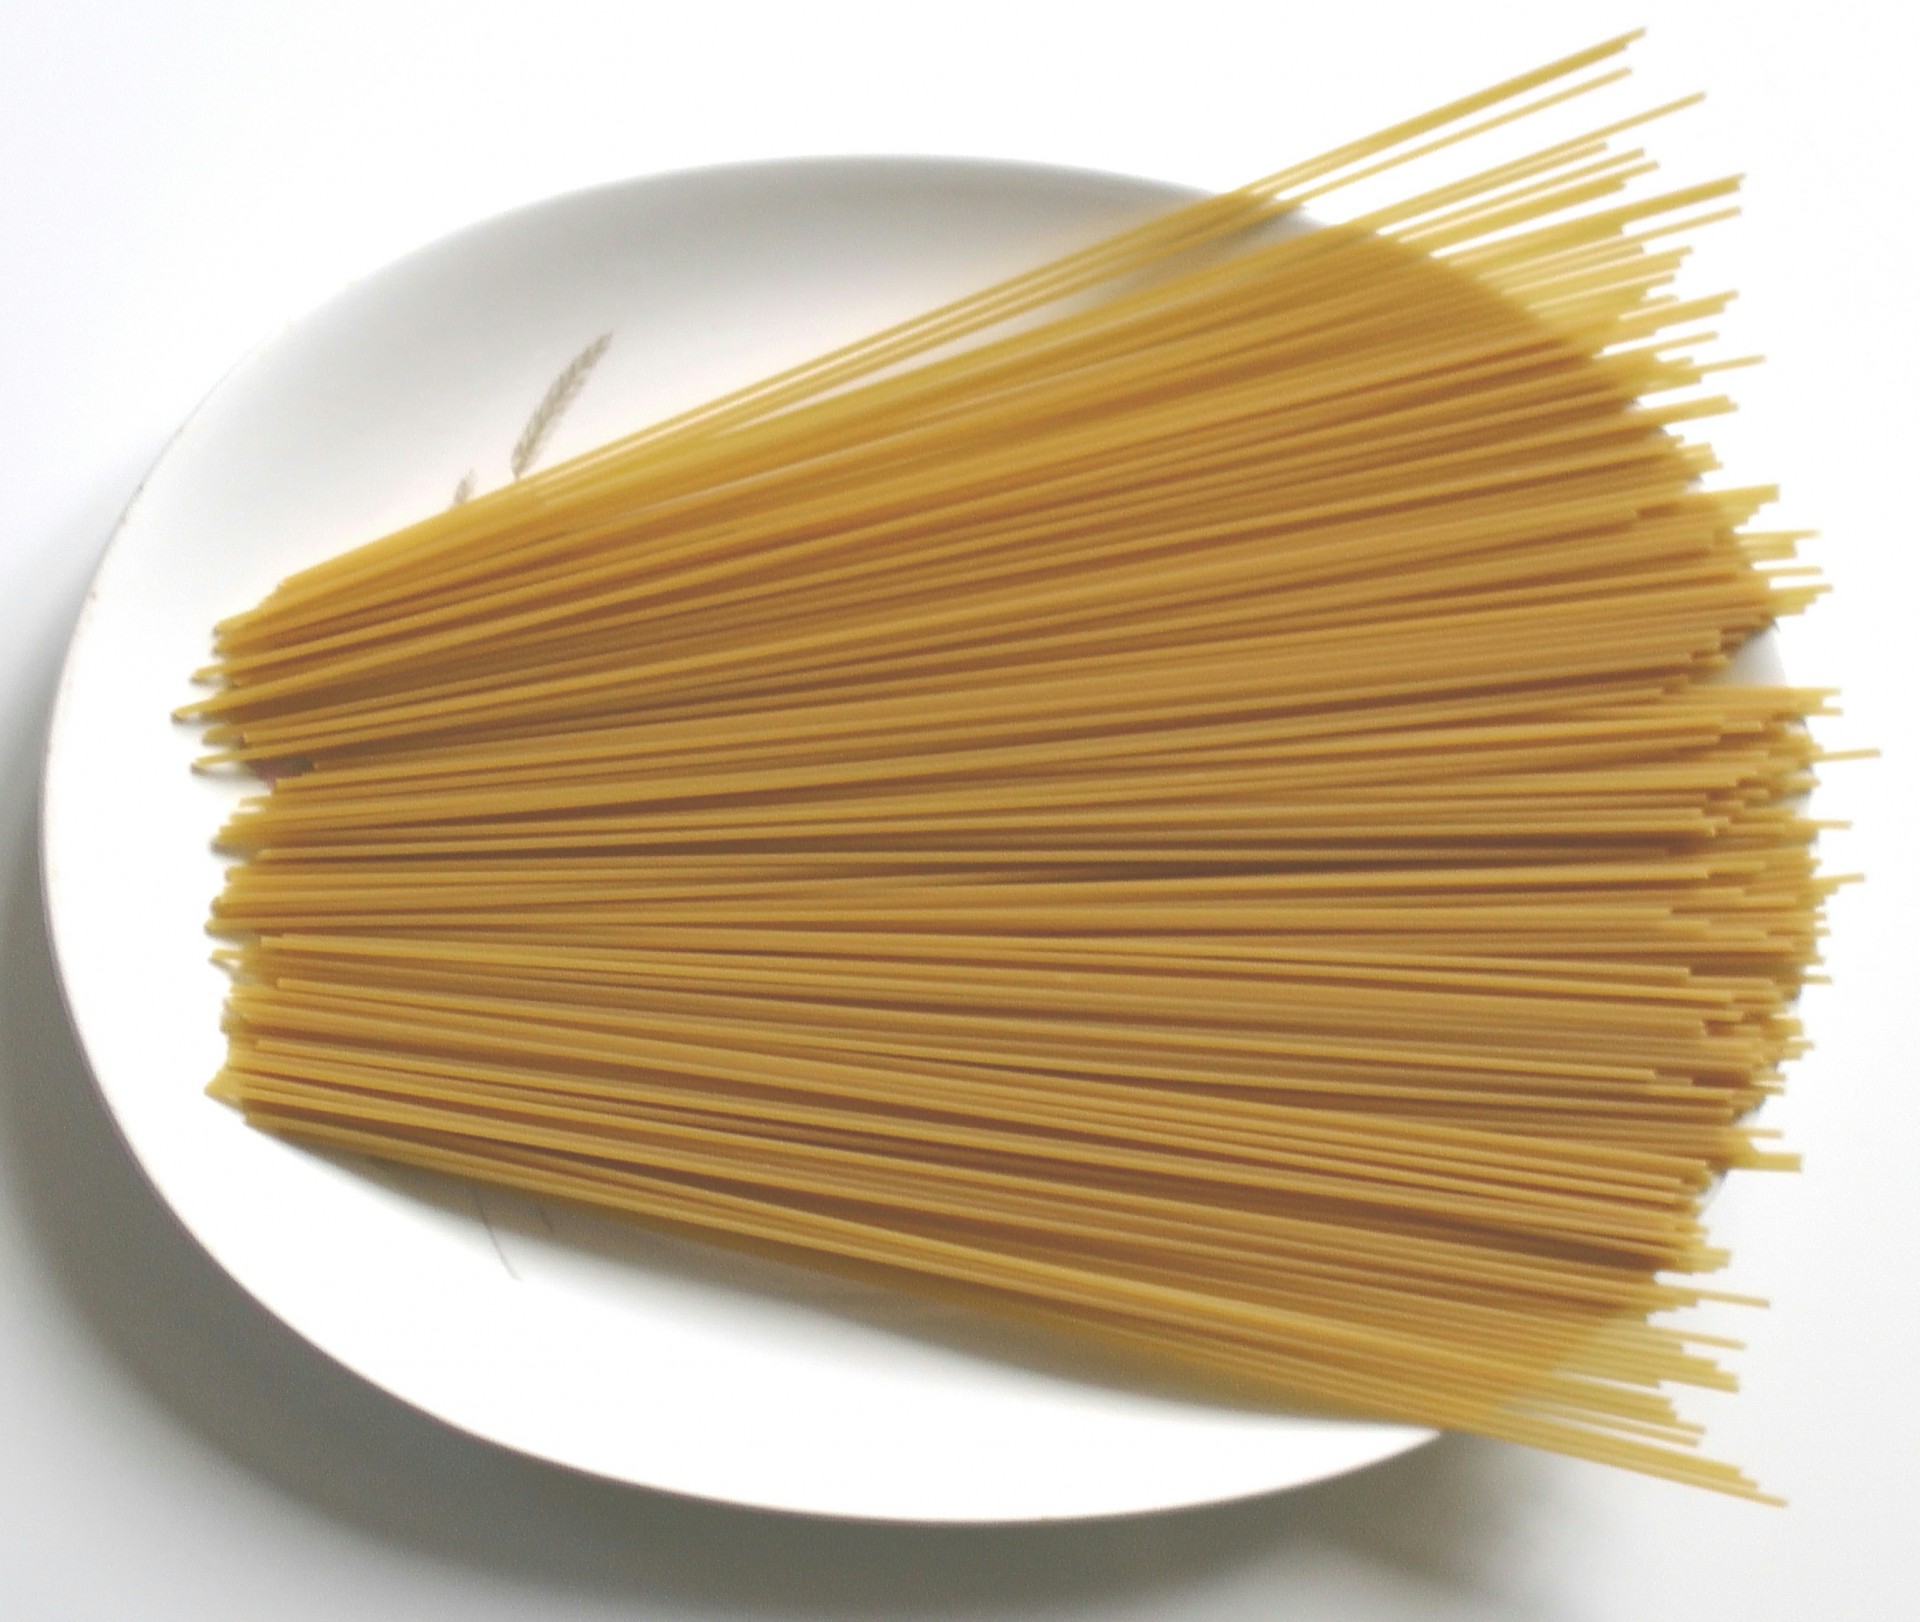 Spaghetti On Plate